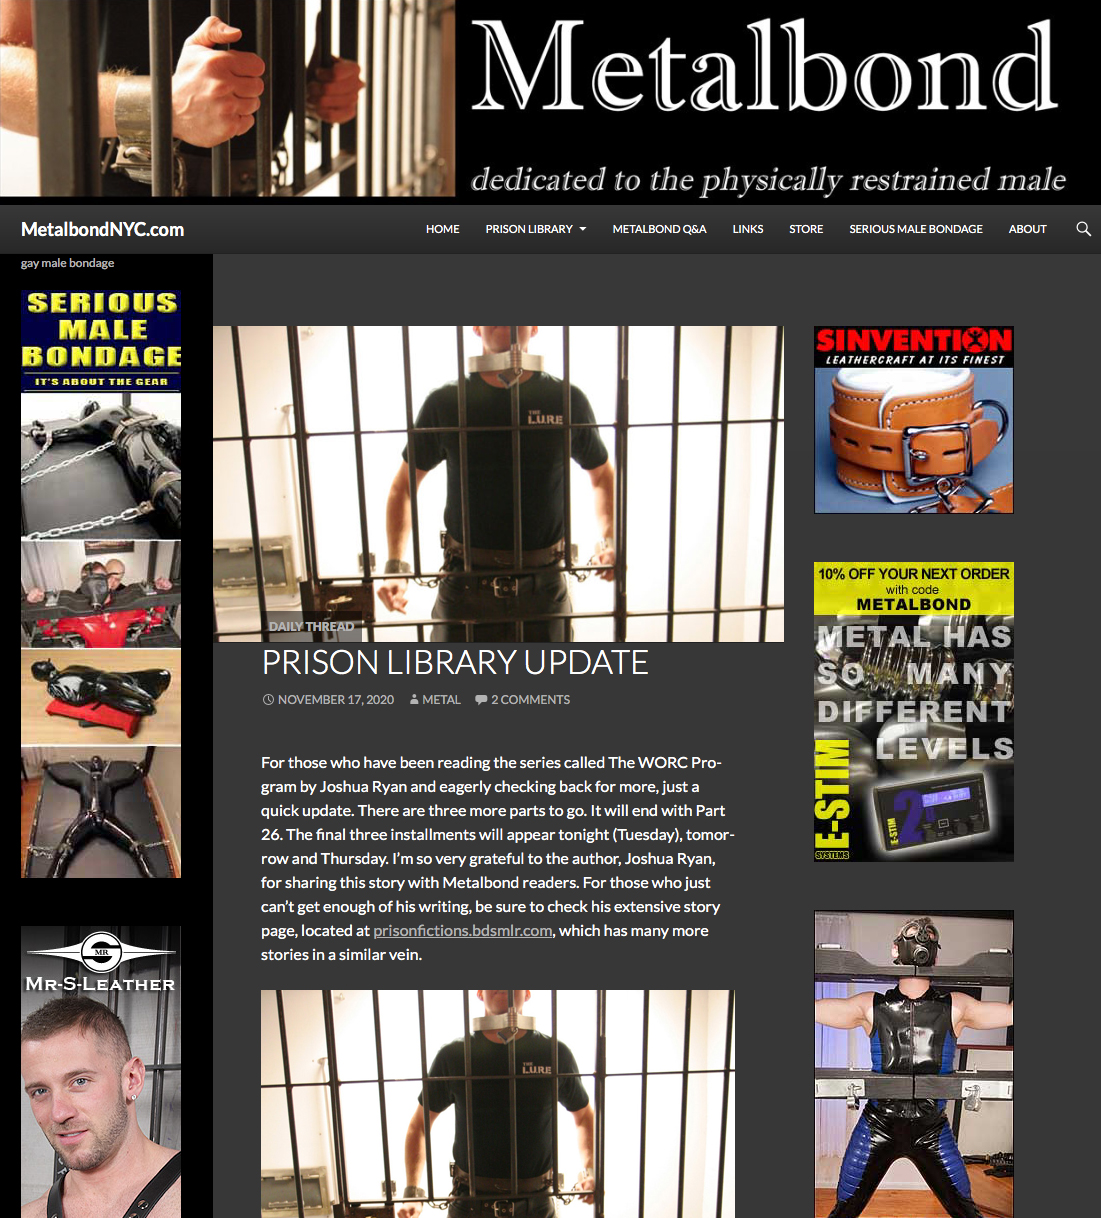 Metalbond gay bondage website